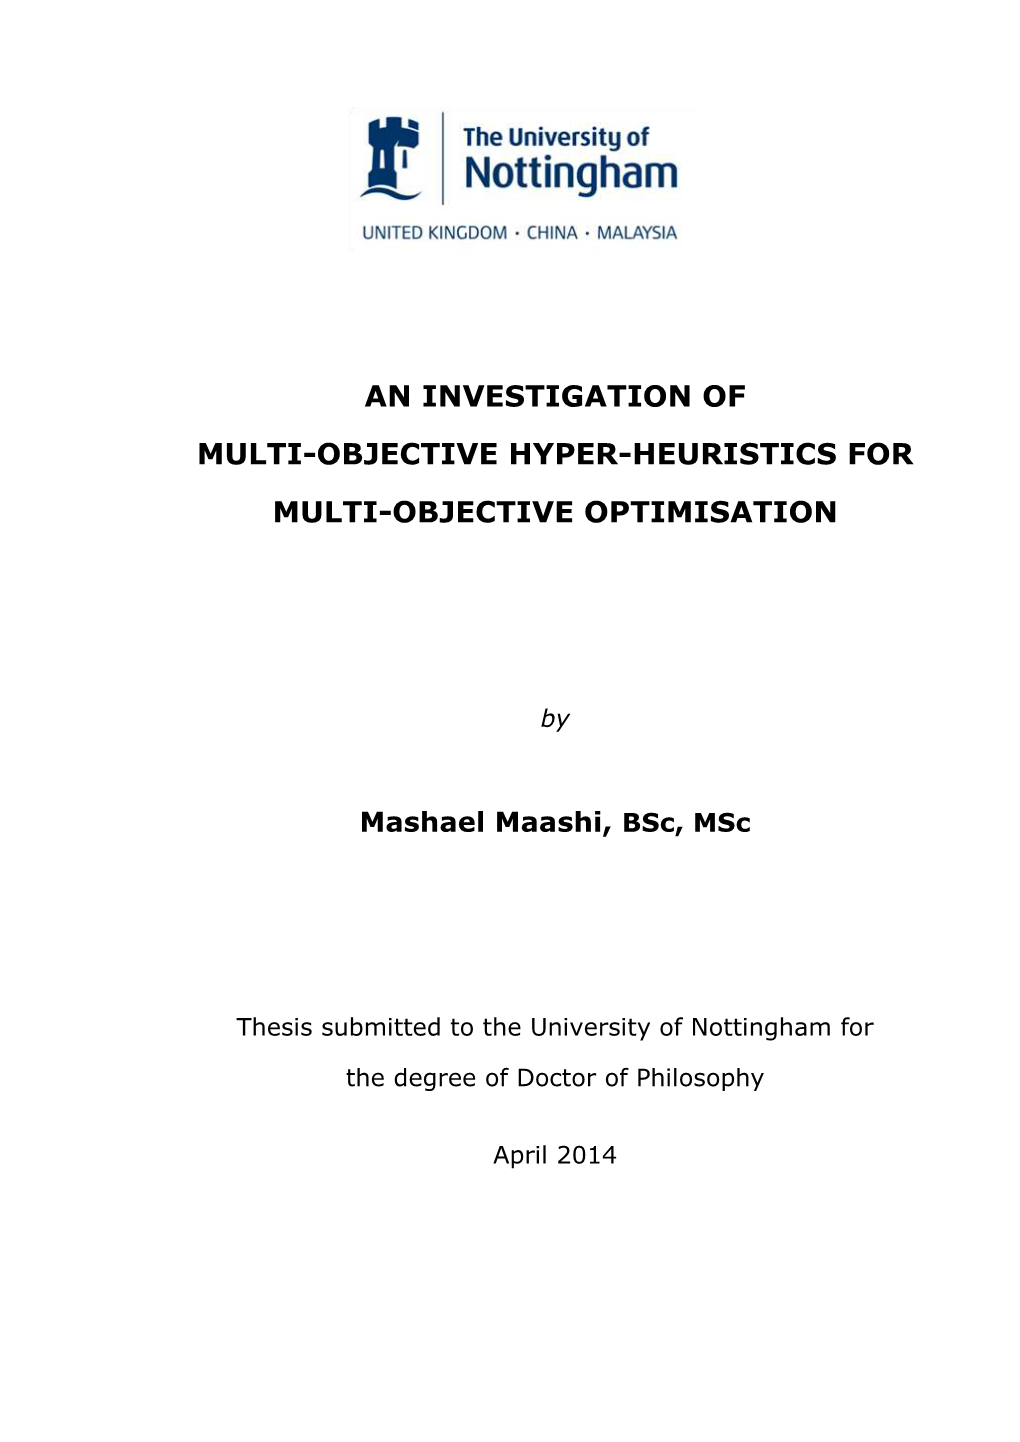 An Investigation of Multi-Objective Hyper-Heuristics for Multi-Objective Optimisation